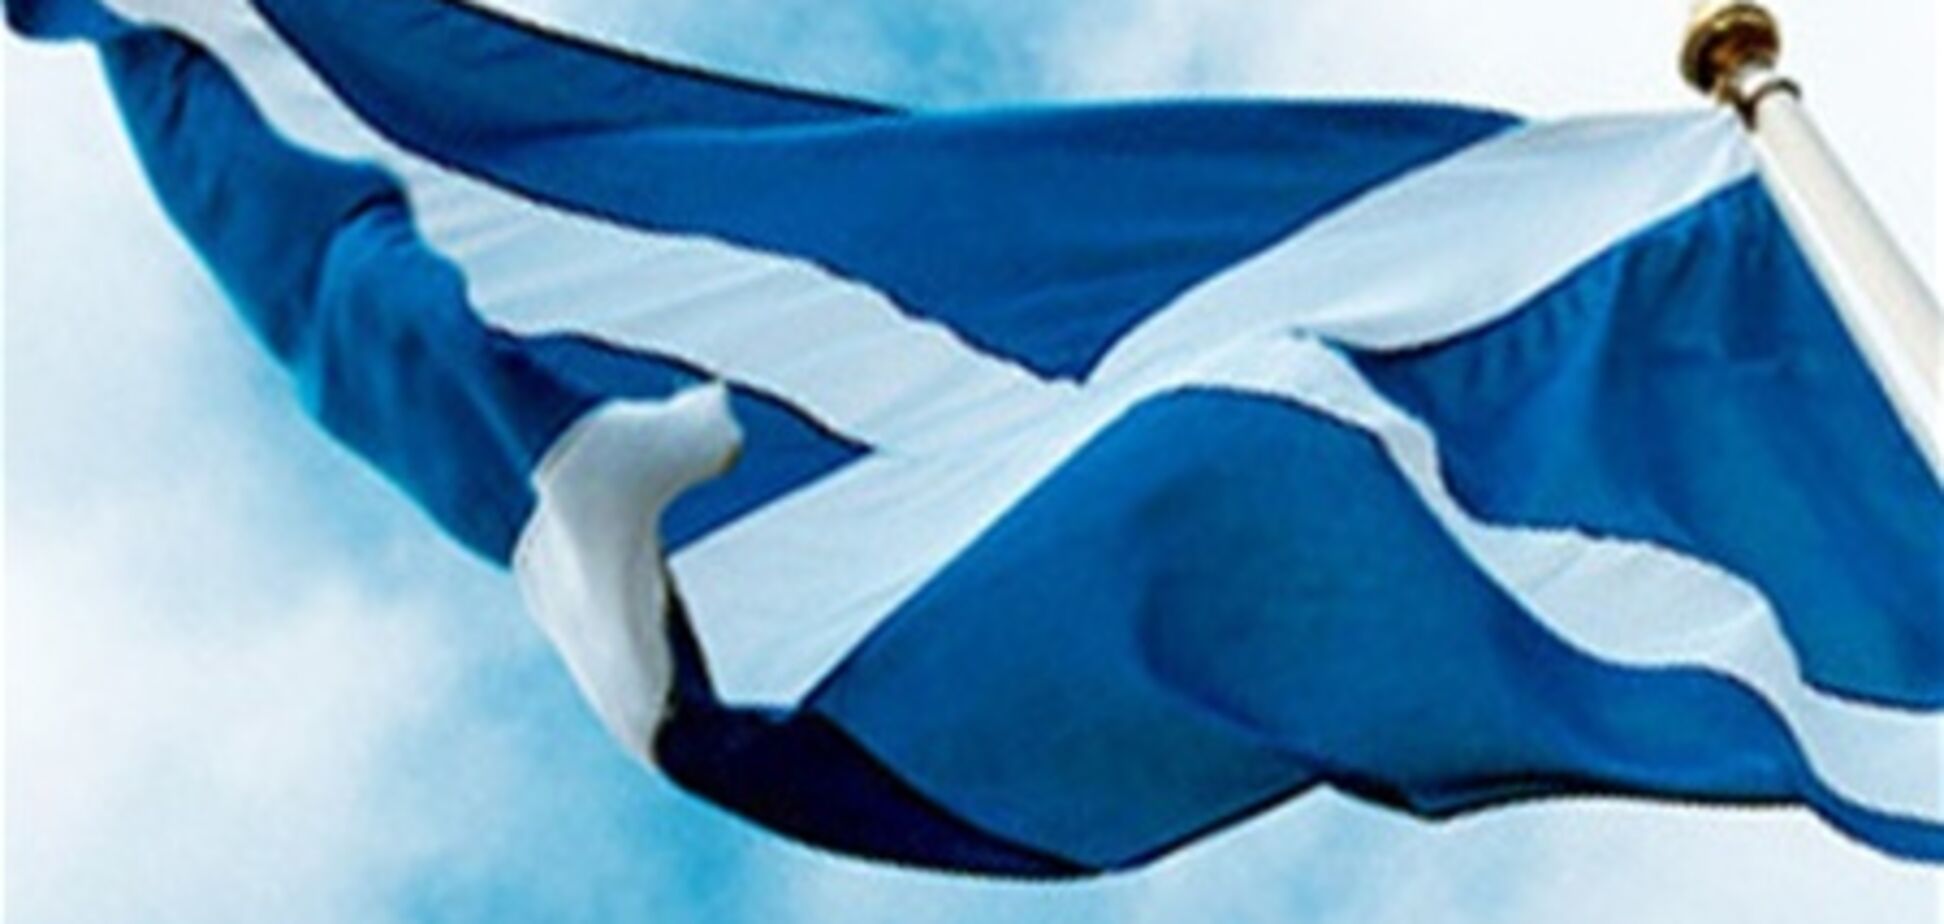 Лондон опублковал доклад против независимости Шотландии